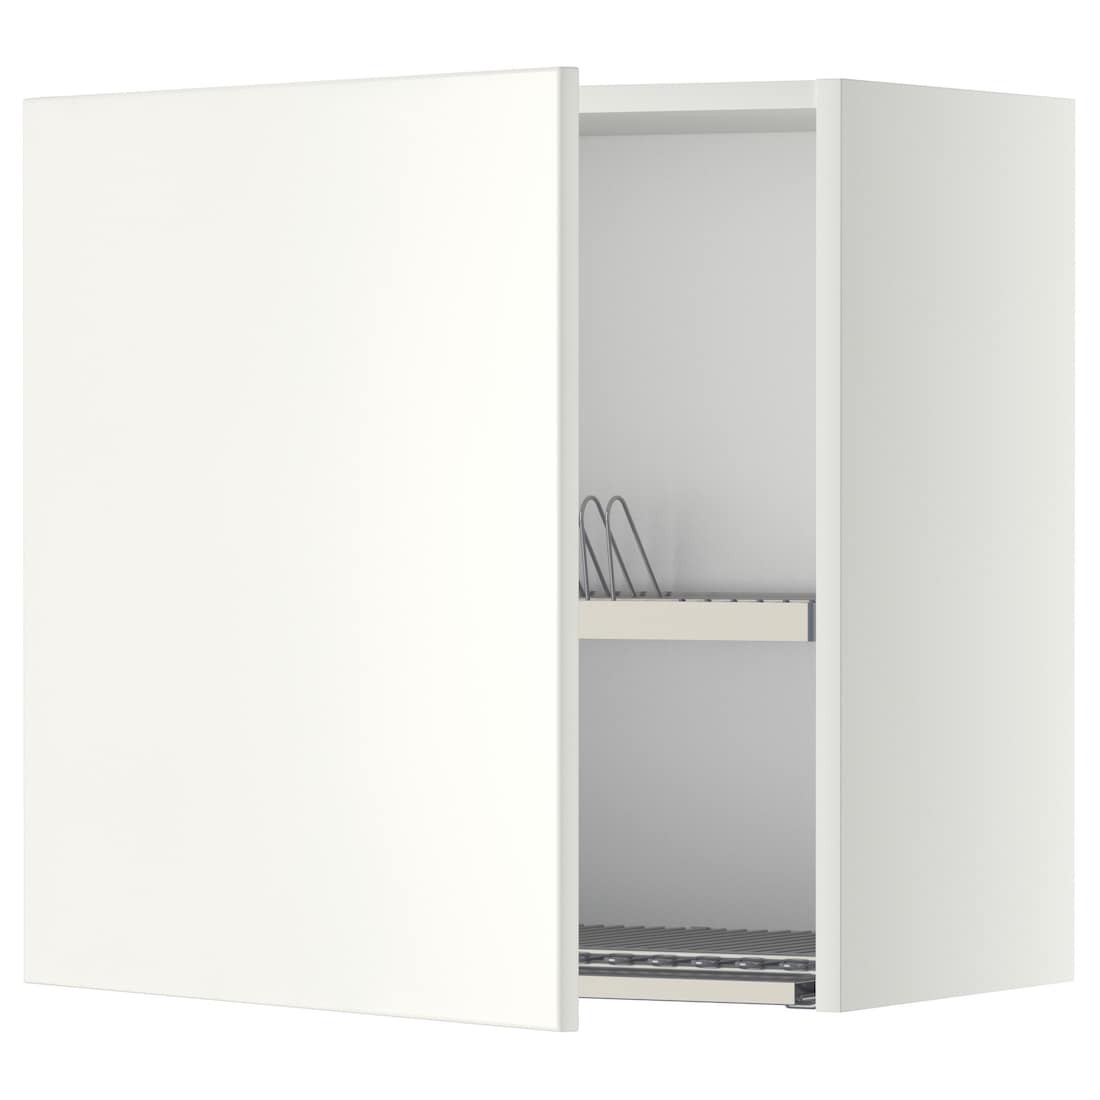 IKEA METOD МЕТОД Навесной шкаф с сушилкой, белый / Veddinge белый, 60x60 см 79455238 794.552.38